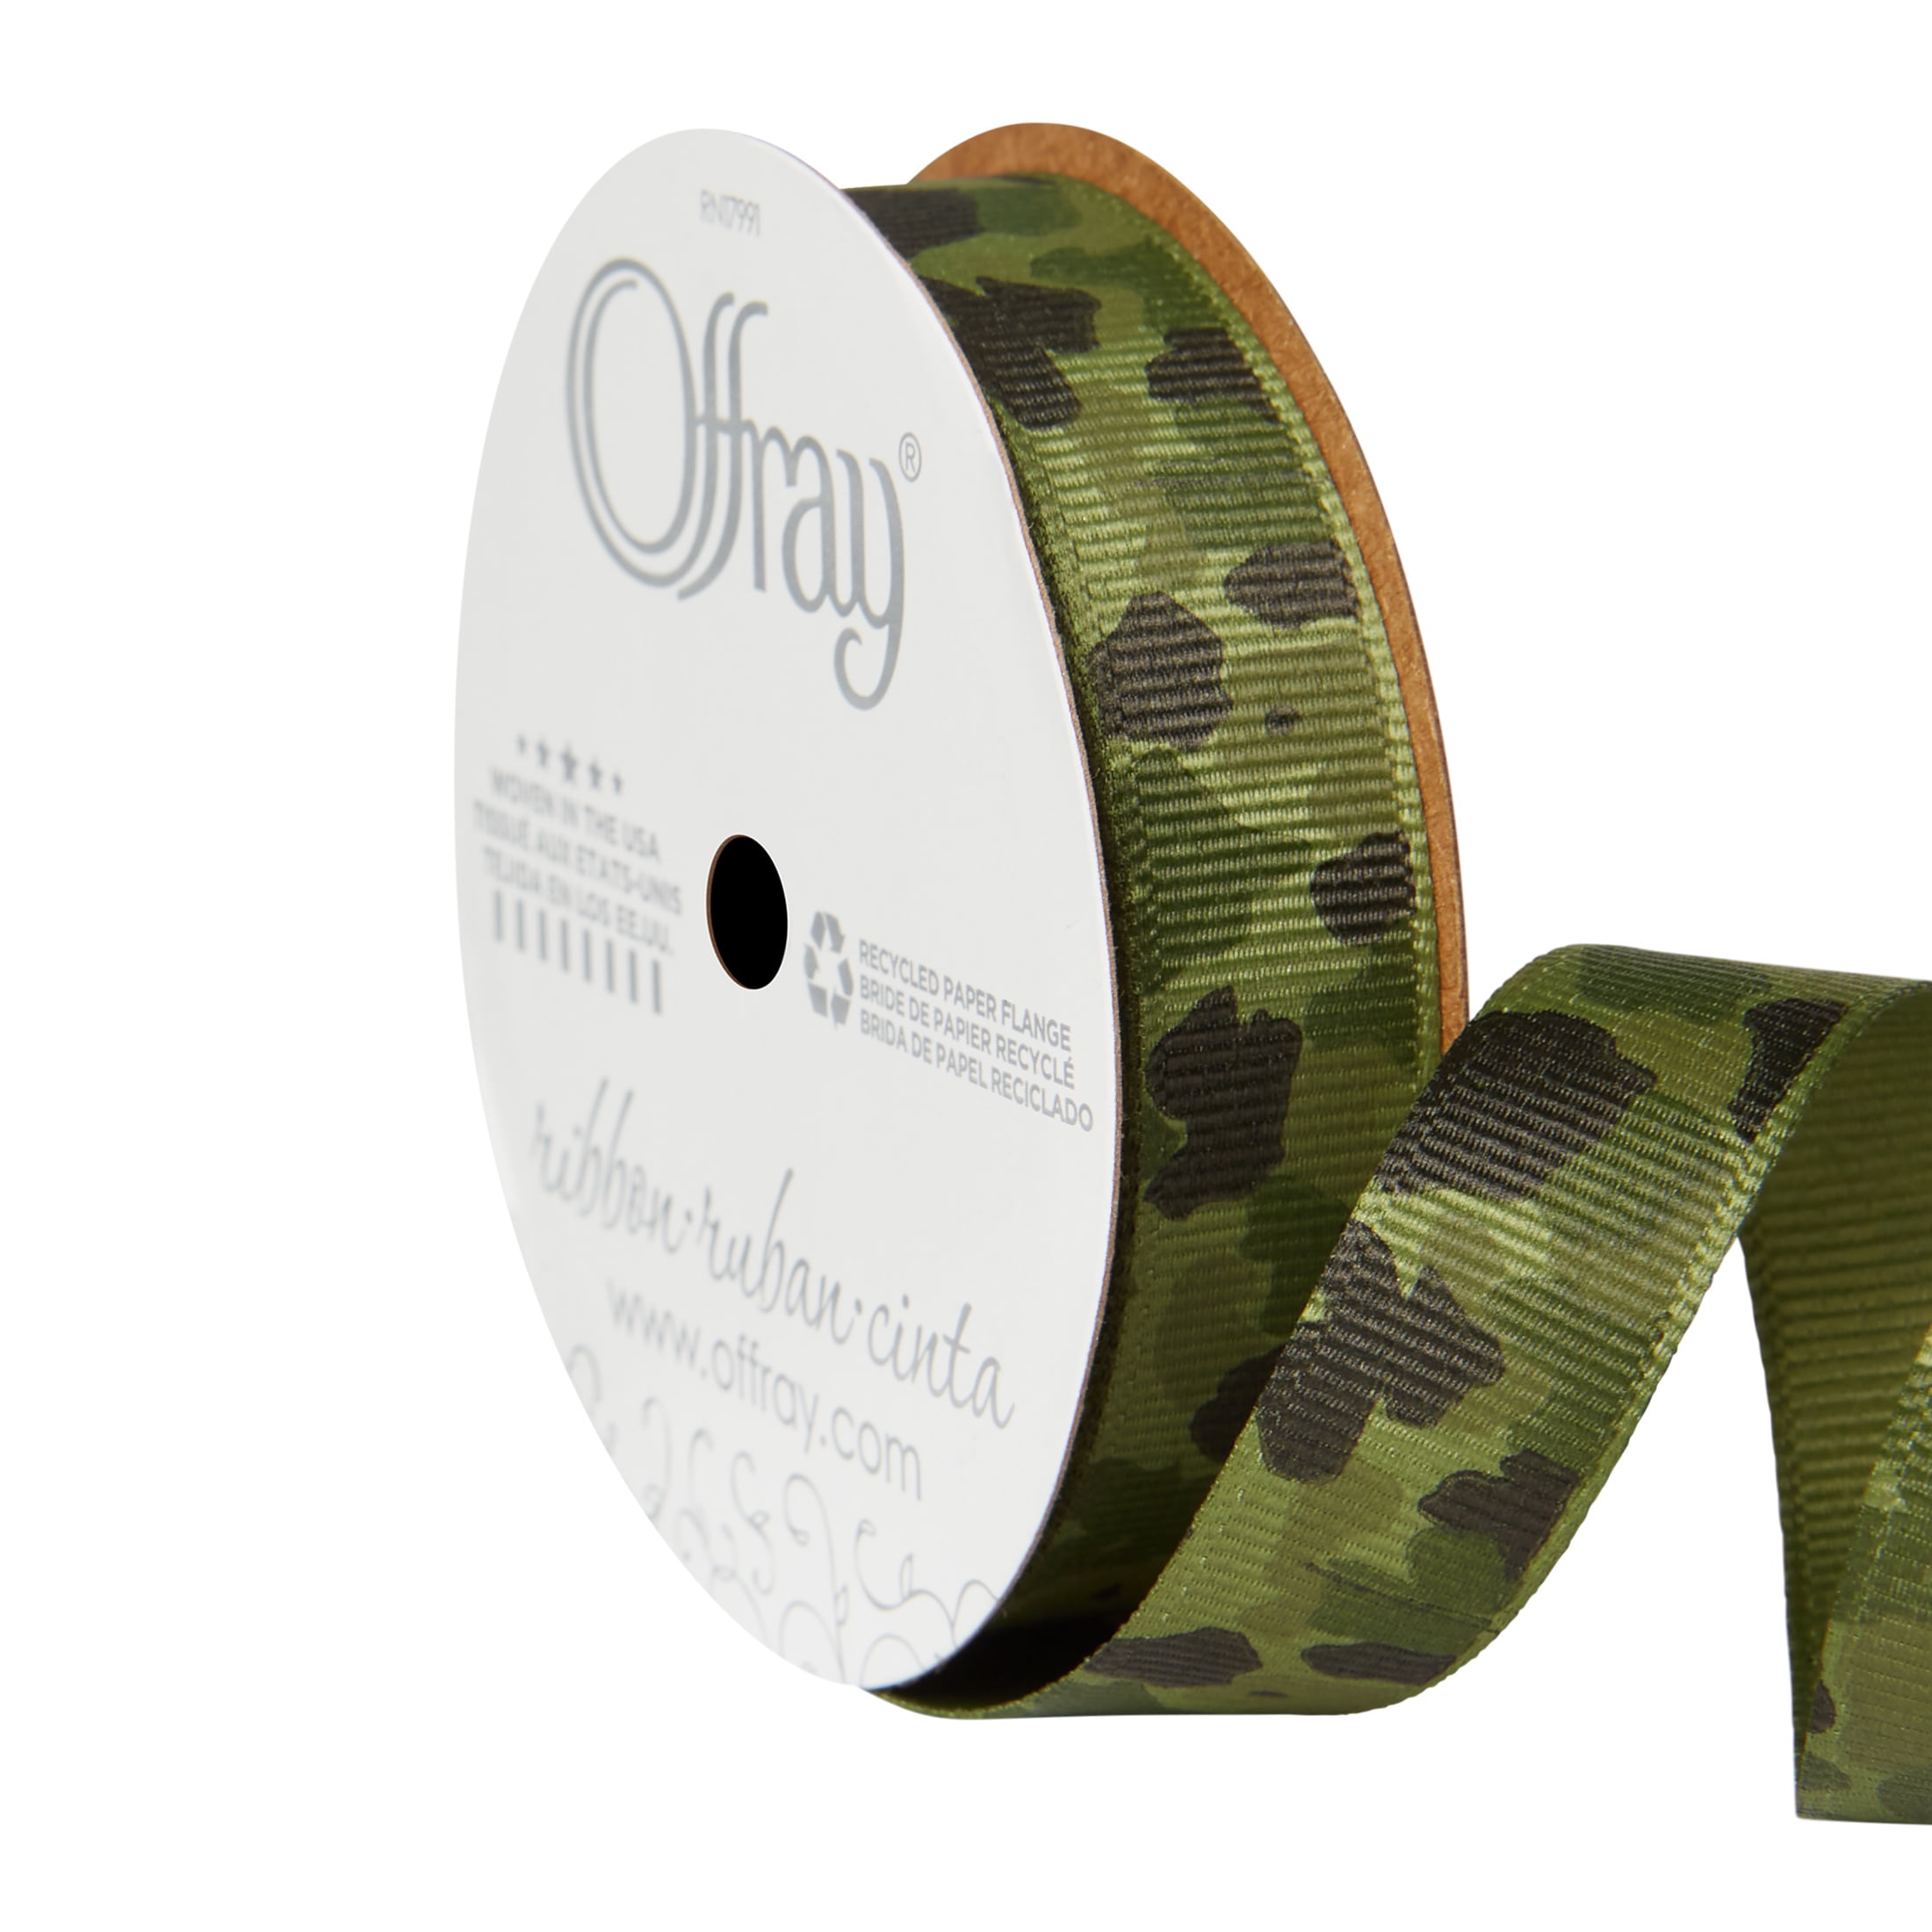 Camouflage Grosgrain Ribbon, 2-Inch, 10-Yard Green